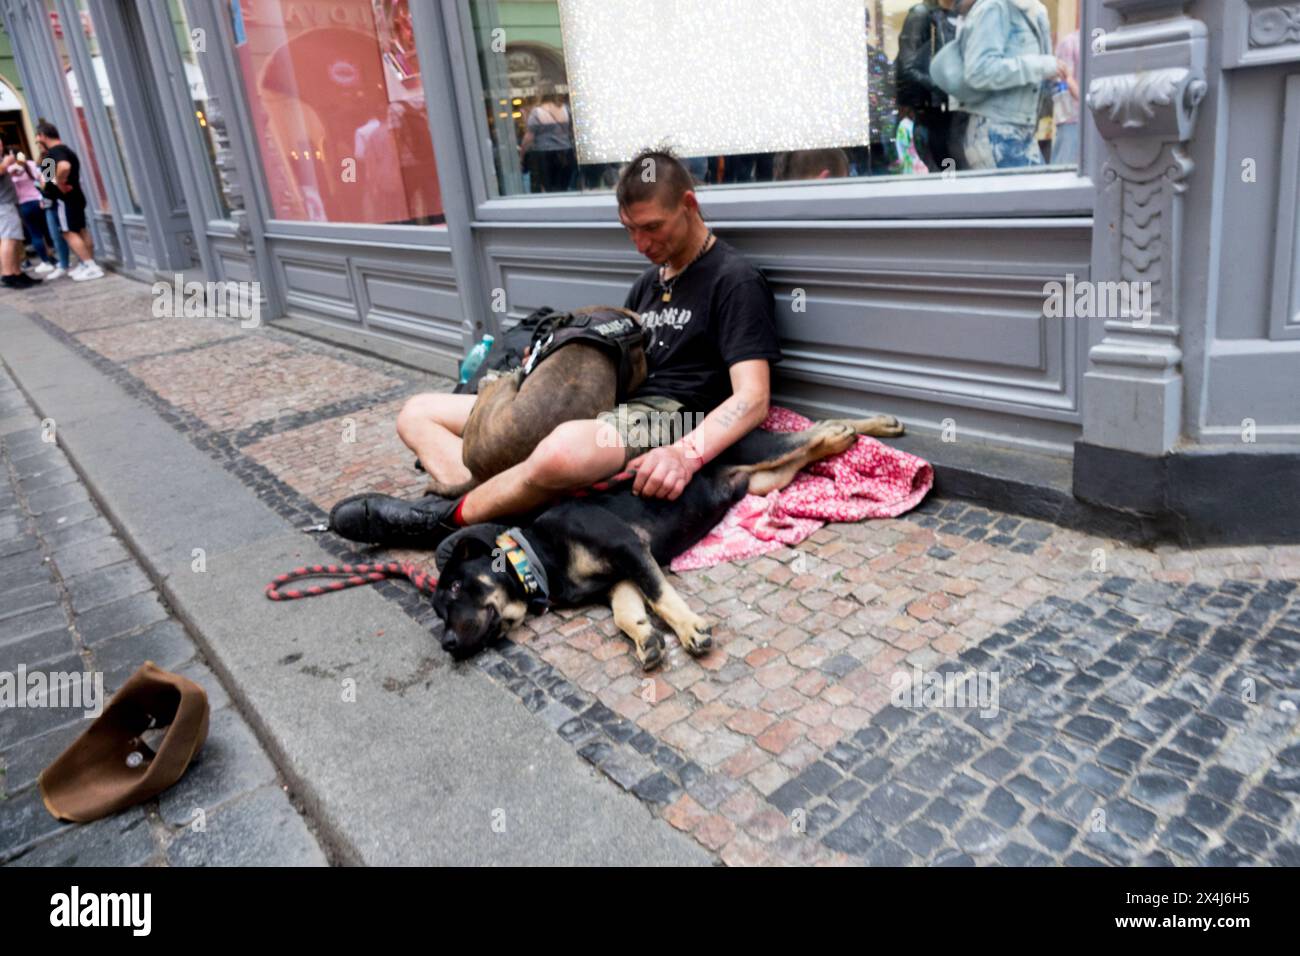 Homeless Man with Dog Panhandler Beggar Street Begging Stock Photo